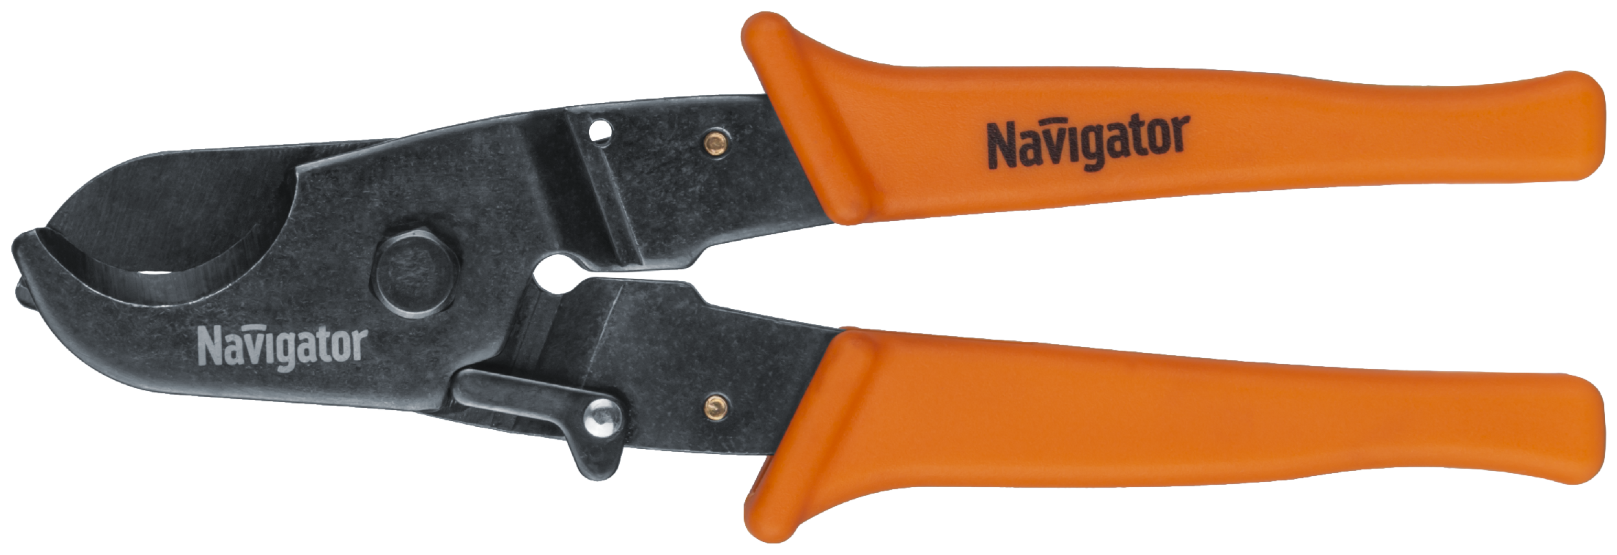 Ножницы Navigator 82 397 NHT-Nk01-220 (кабельные 220)